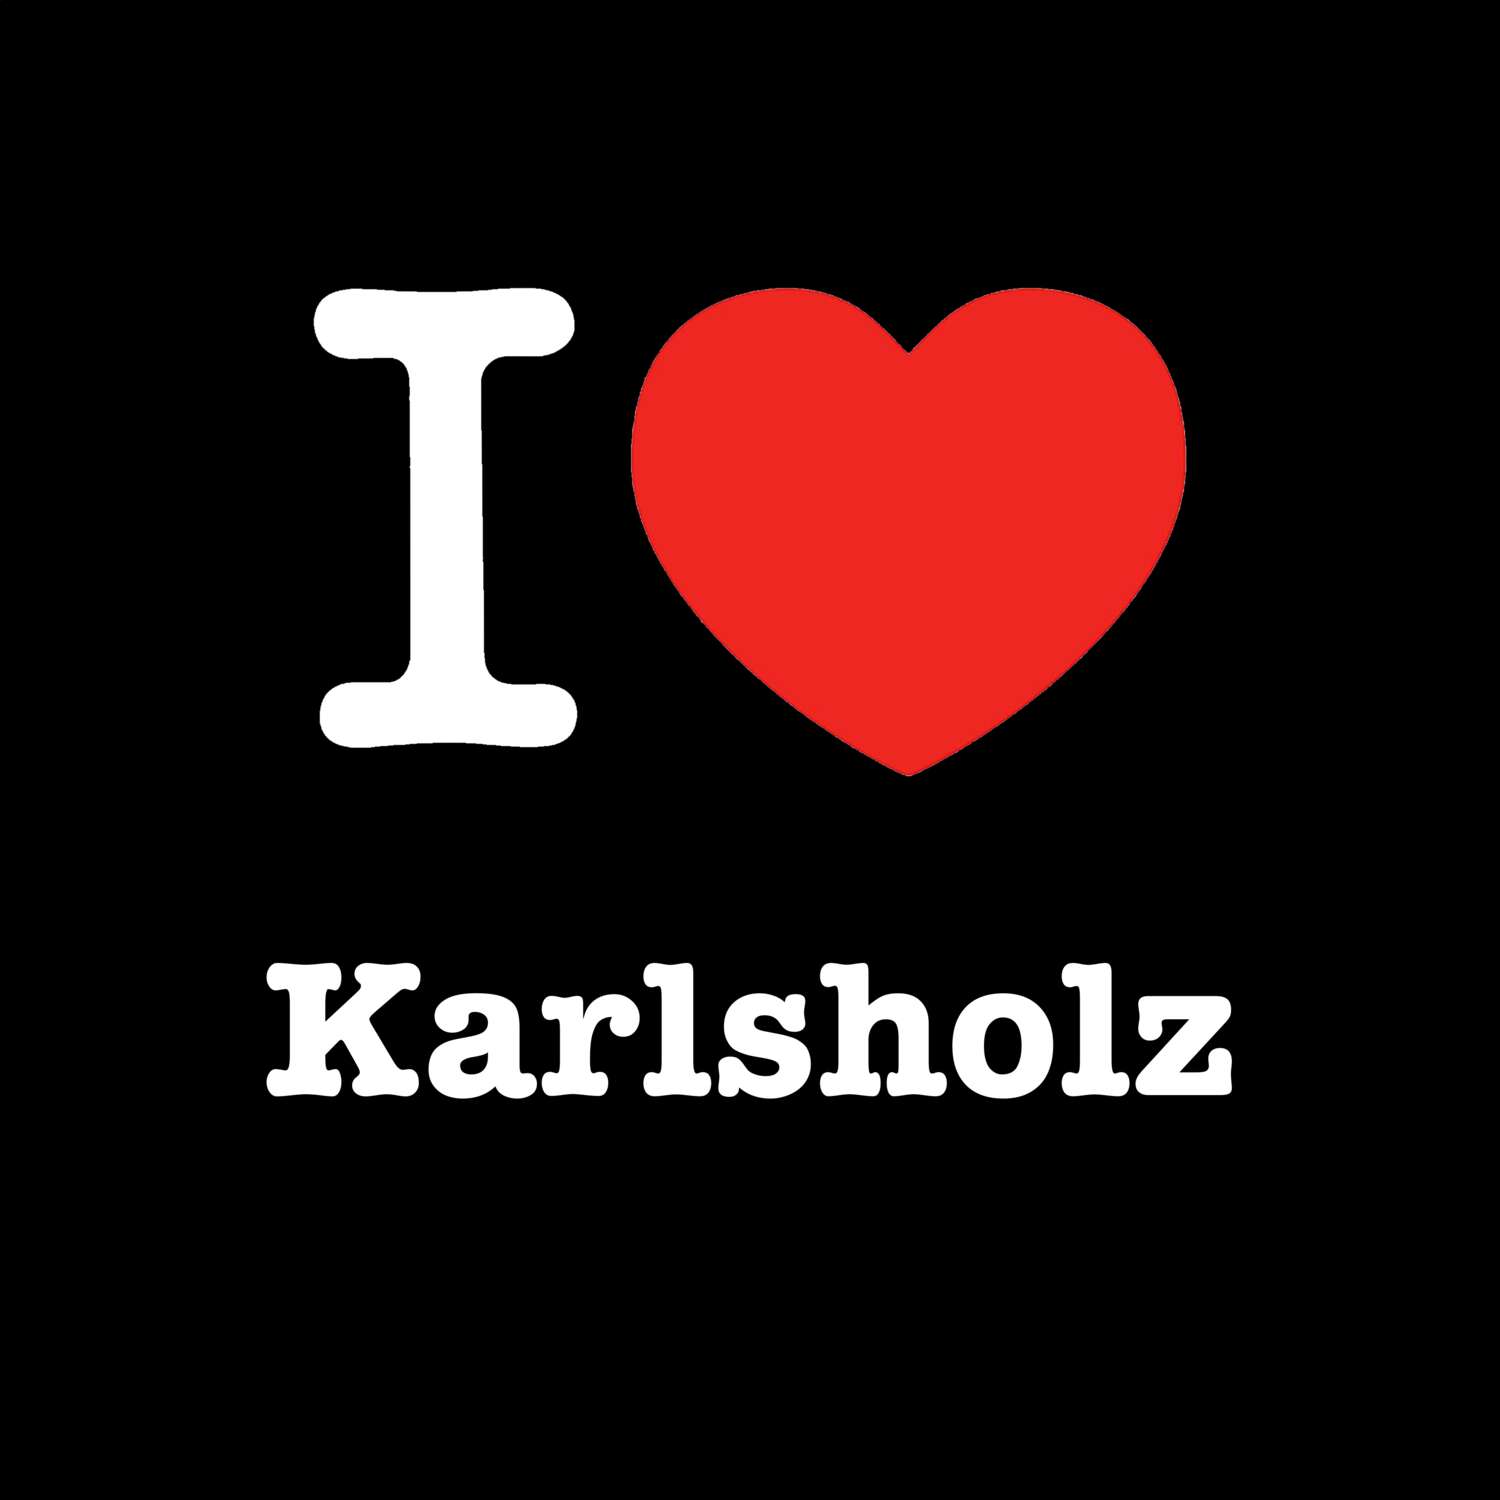 Karlsholz T-Shirt »I love«